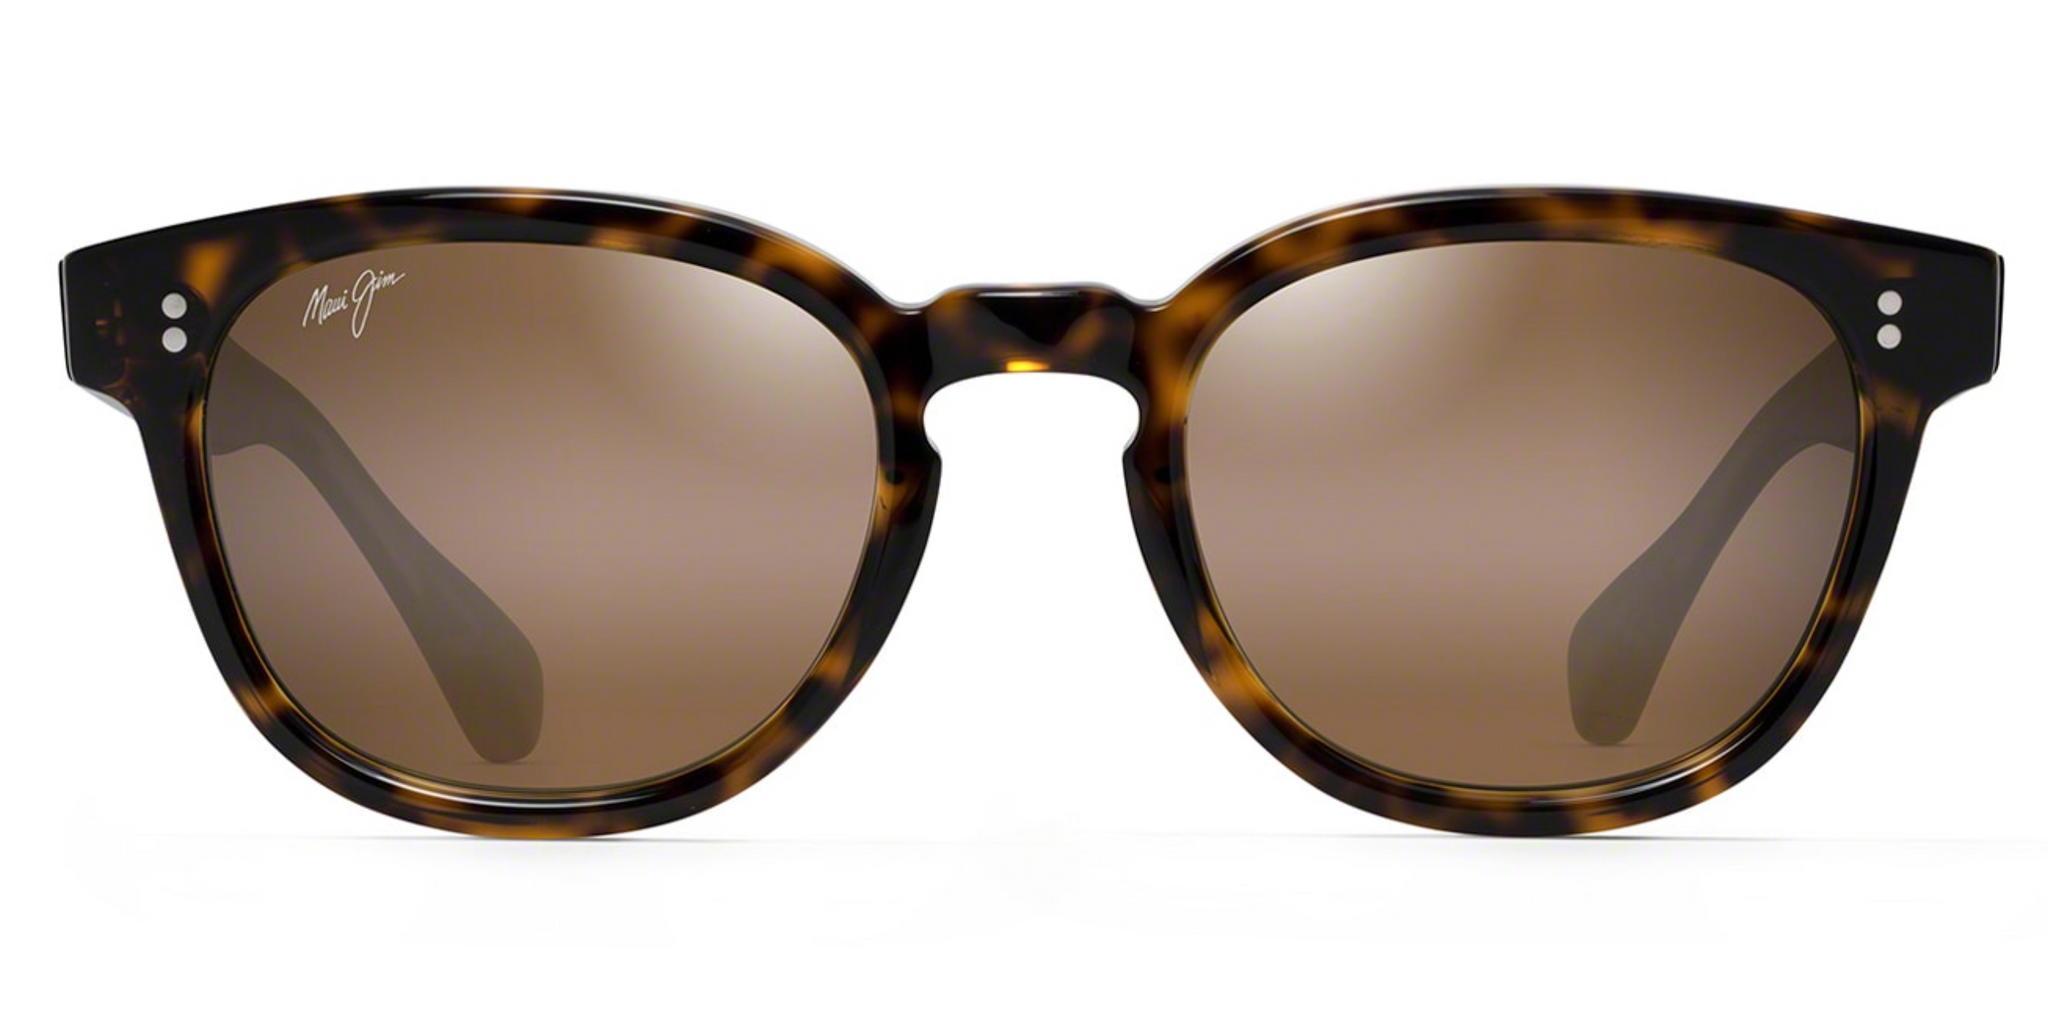 Maui Cheetah 5 842 Sunglasses: Models: H842-10G, H842-21D, R842-05B